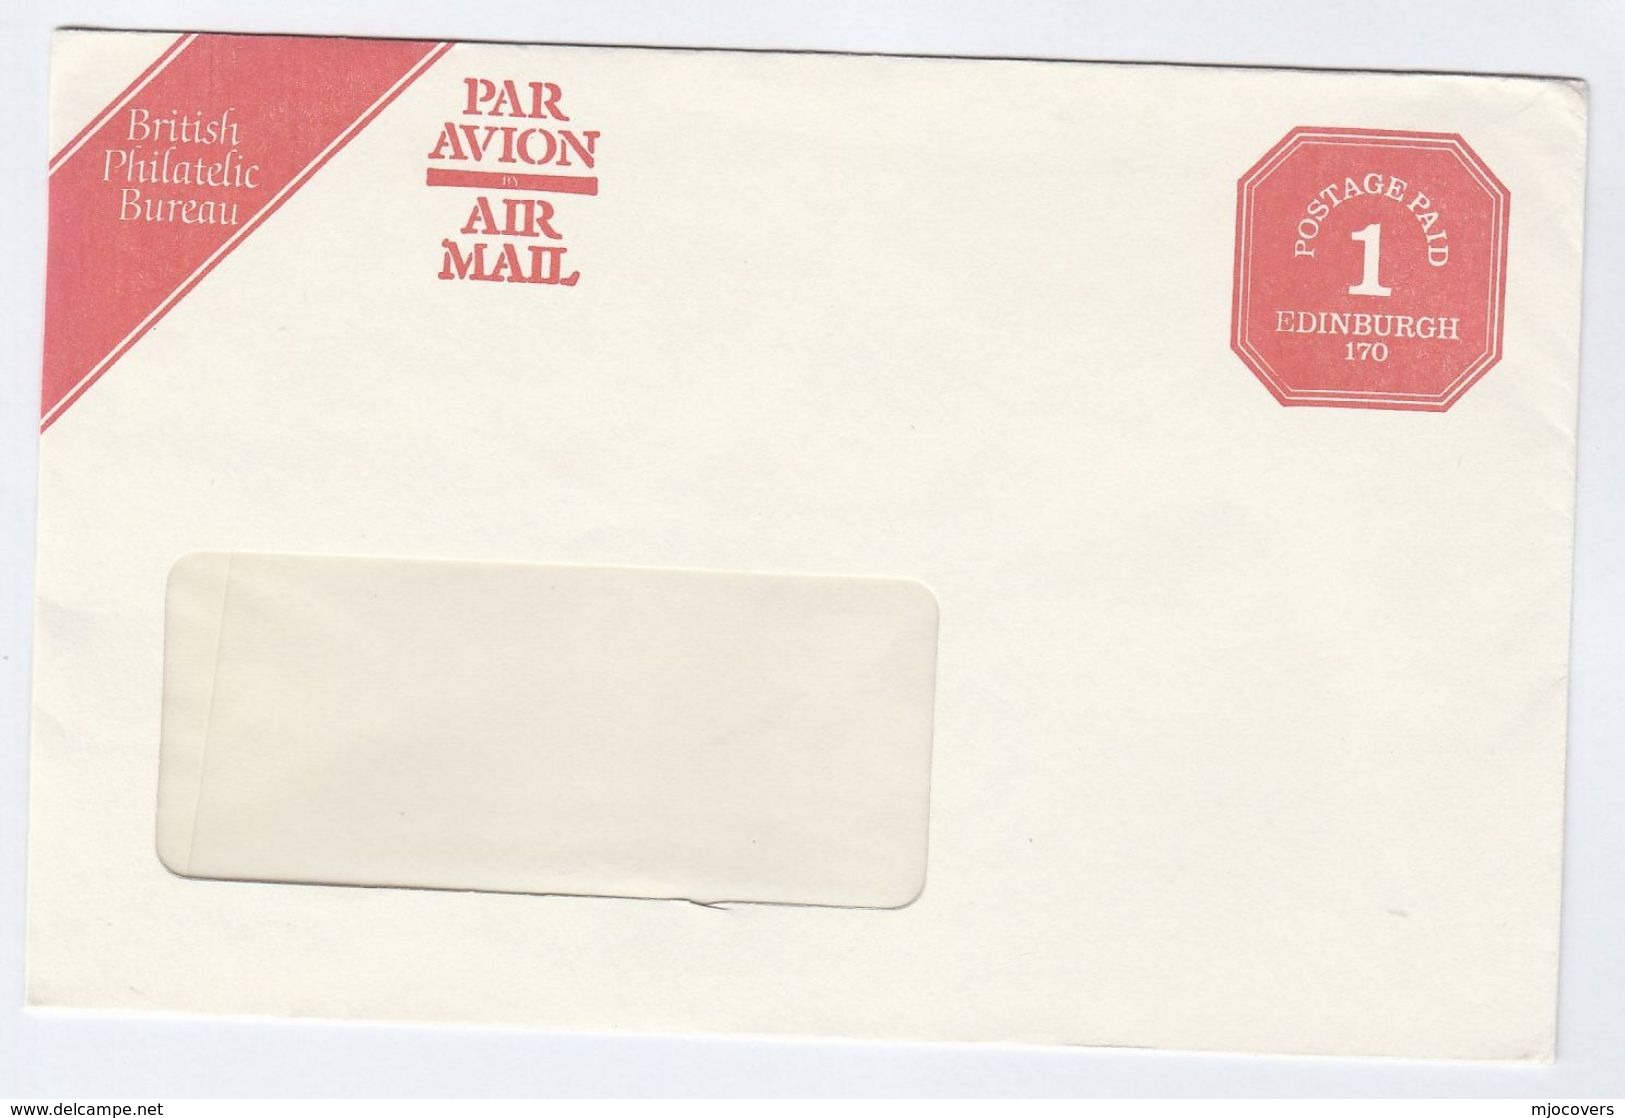 COVER Air Mail POSTAGE PAID 1 EDINBURGH 170 British Philatelic Bureau Postage Stationery GB - Brieven En Documenten